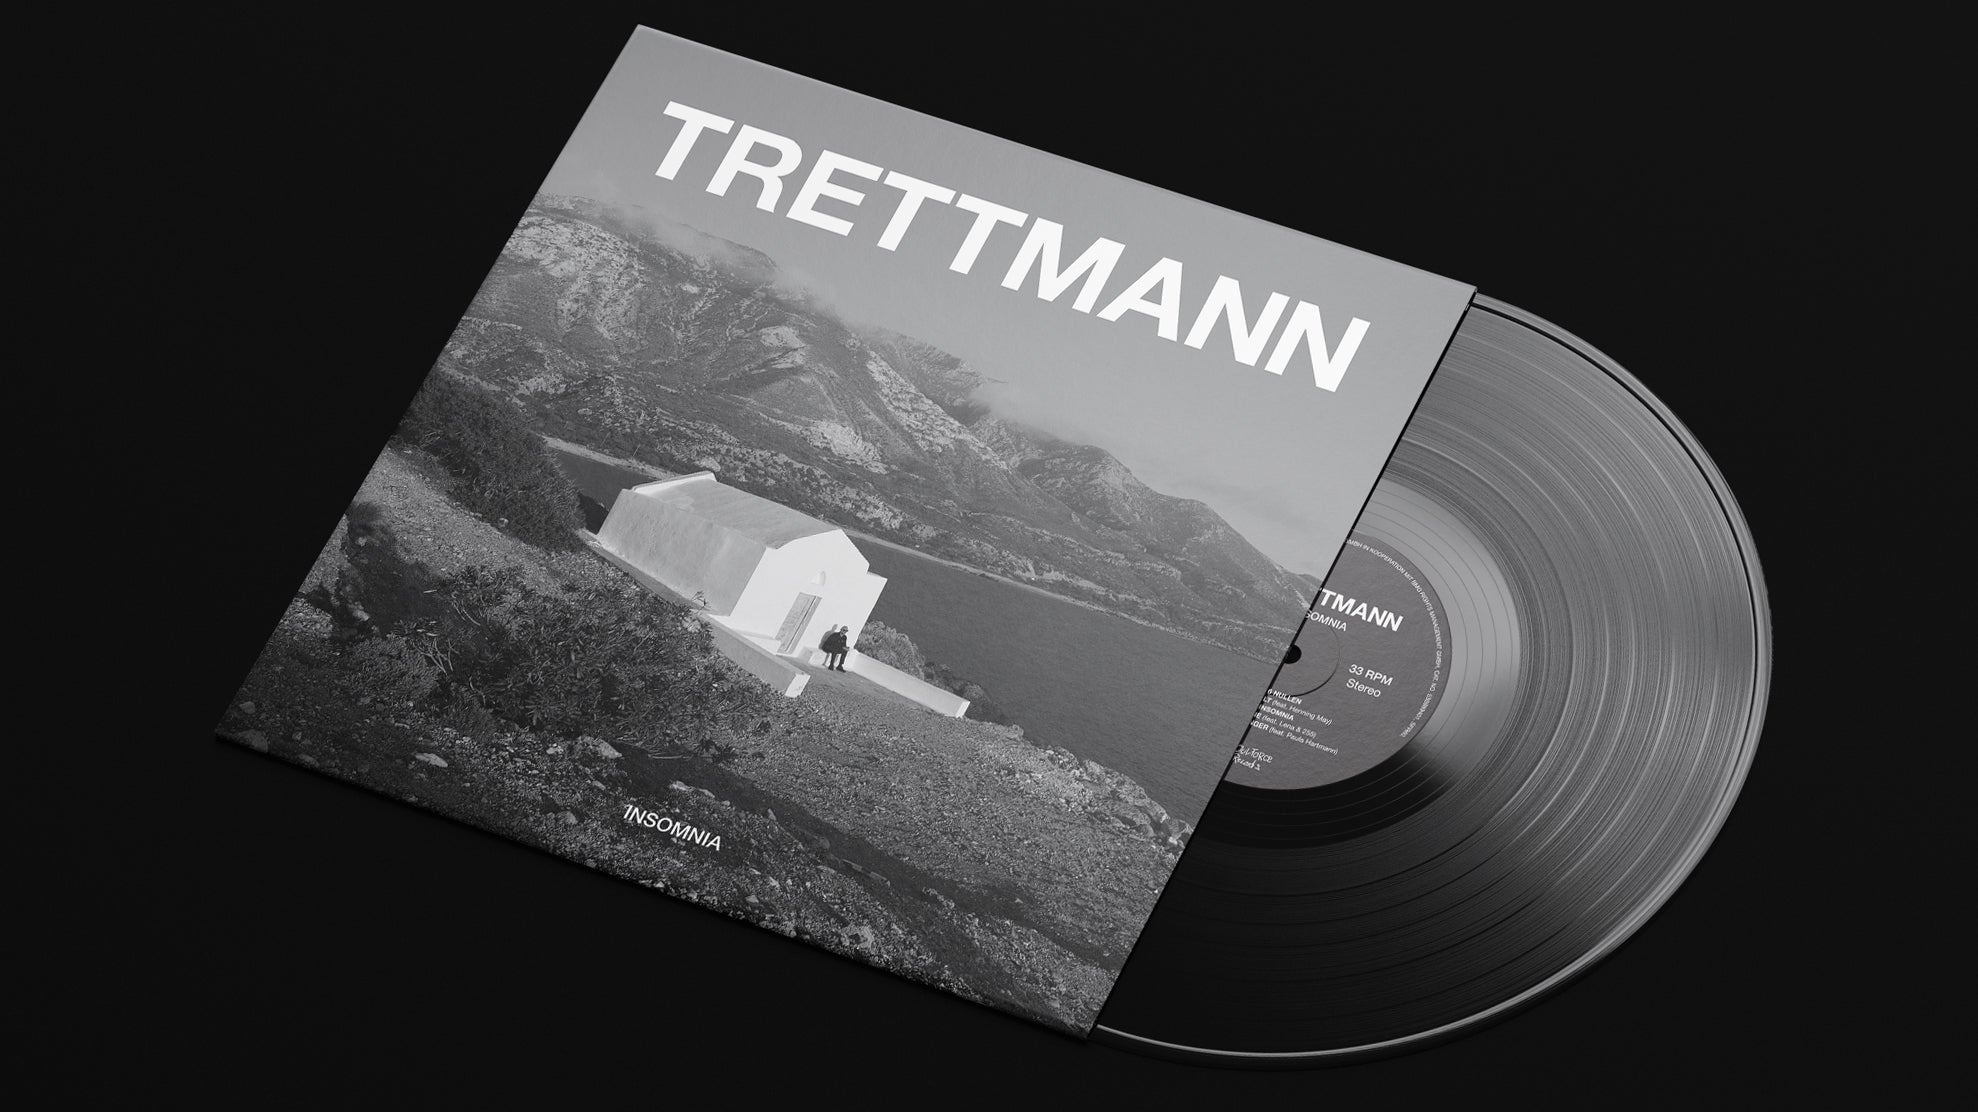 TRETTMANN "INSOMNIA" VINYL ALBUM